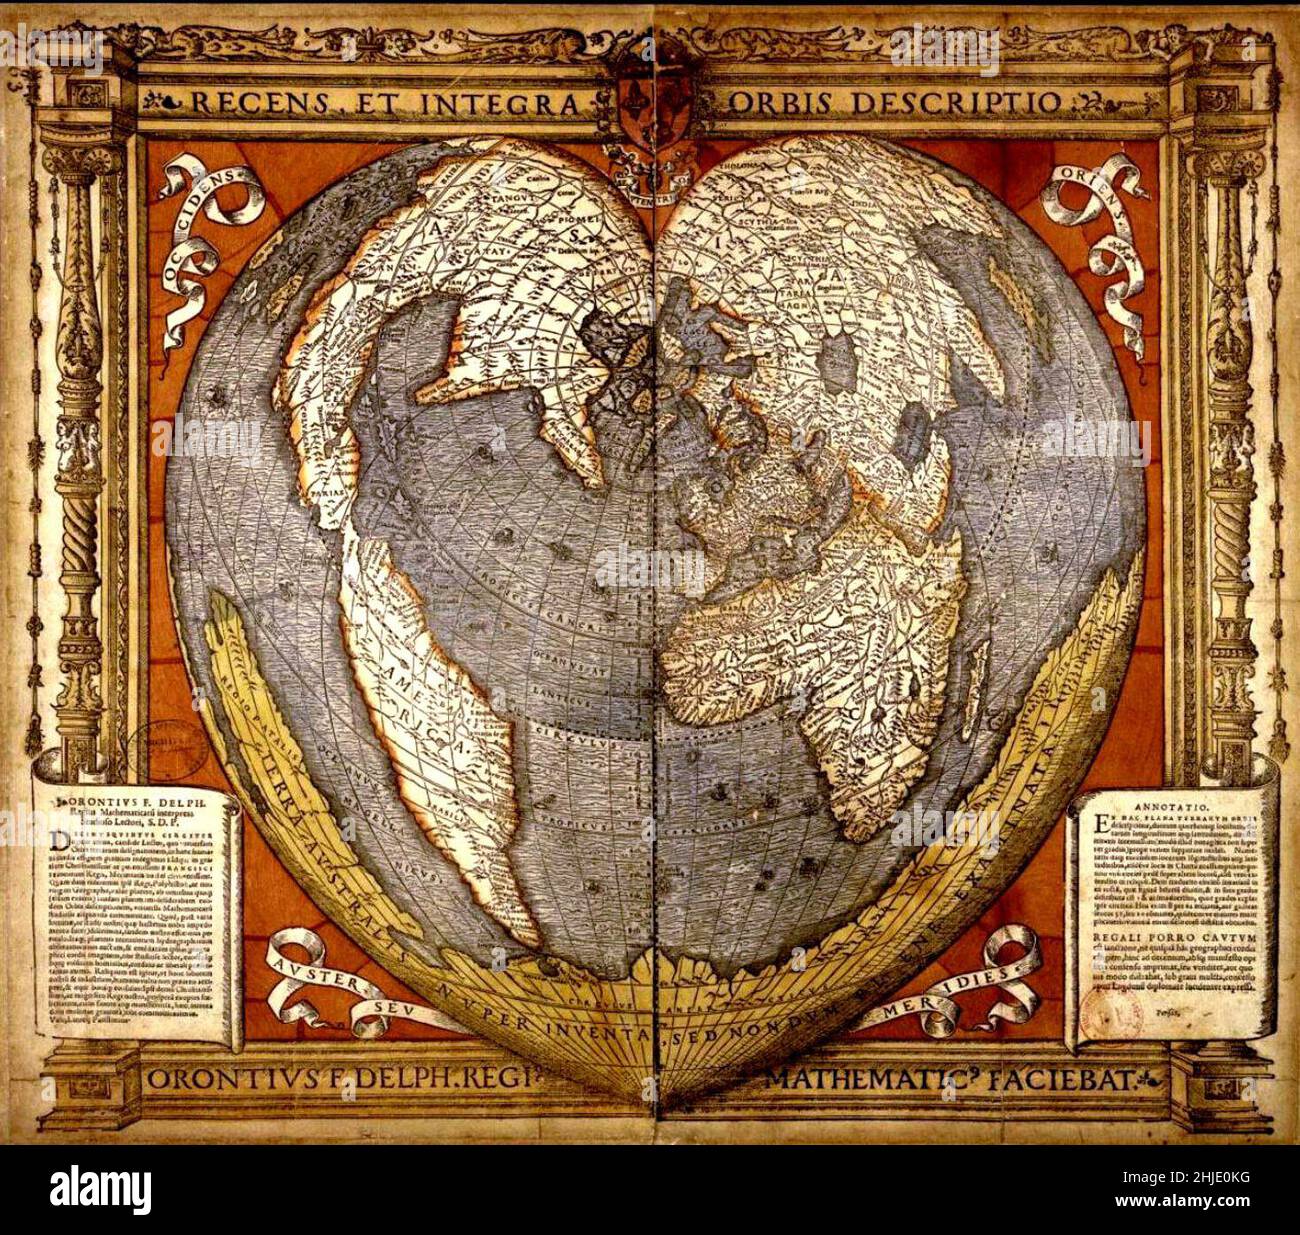 Oronce Fine, Heart-shaped world map showing the southern Earth. Census et integra orbis descriptio , Paris, 1536. Stock Photo